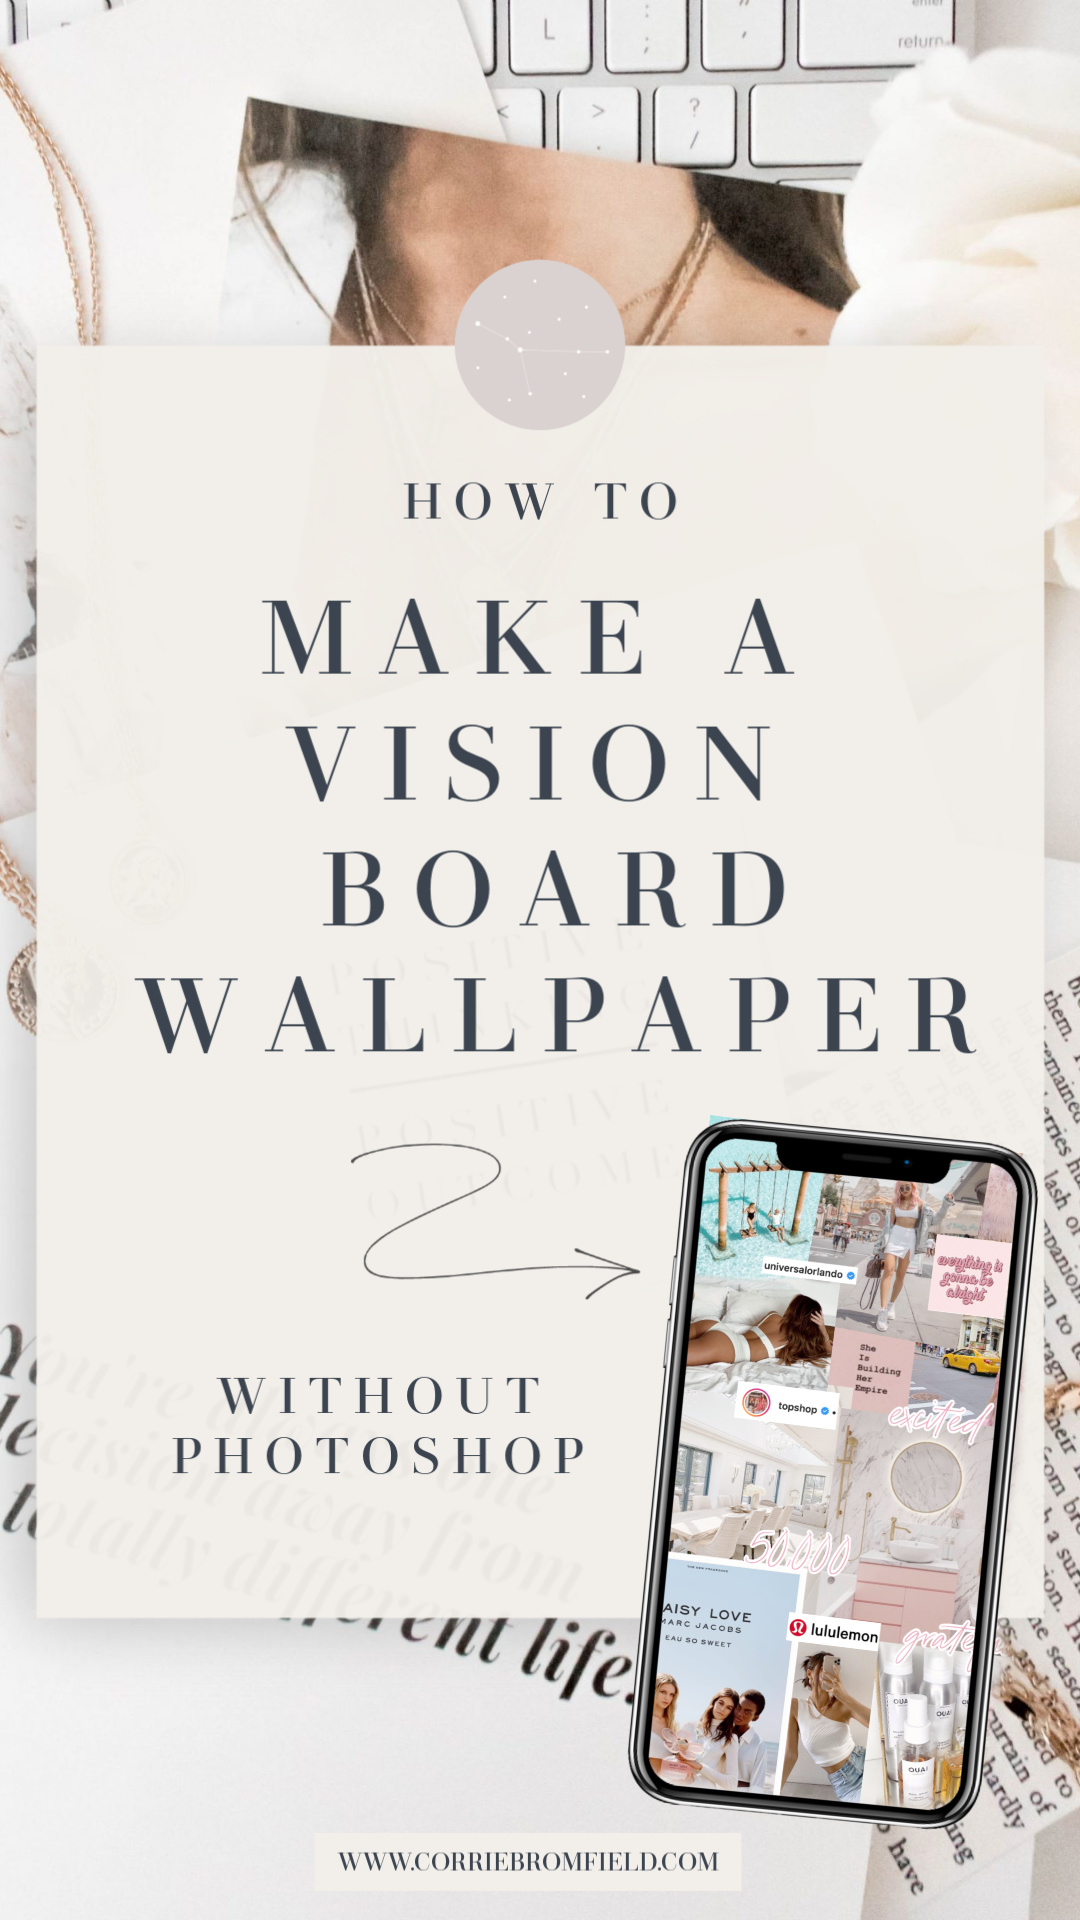 vision board, how to make a vision board, vision board wallpaper